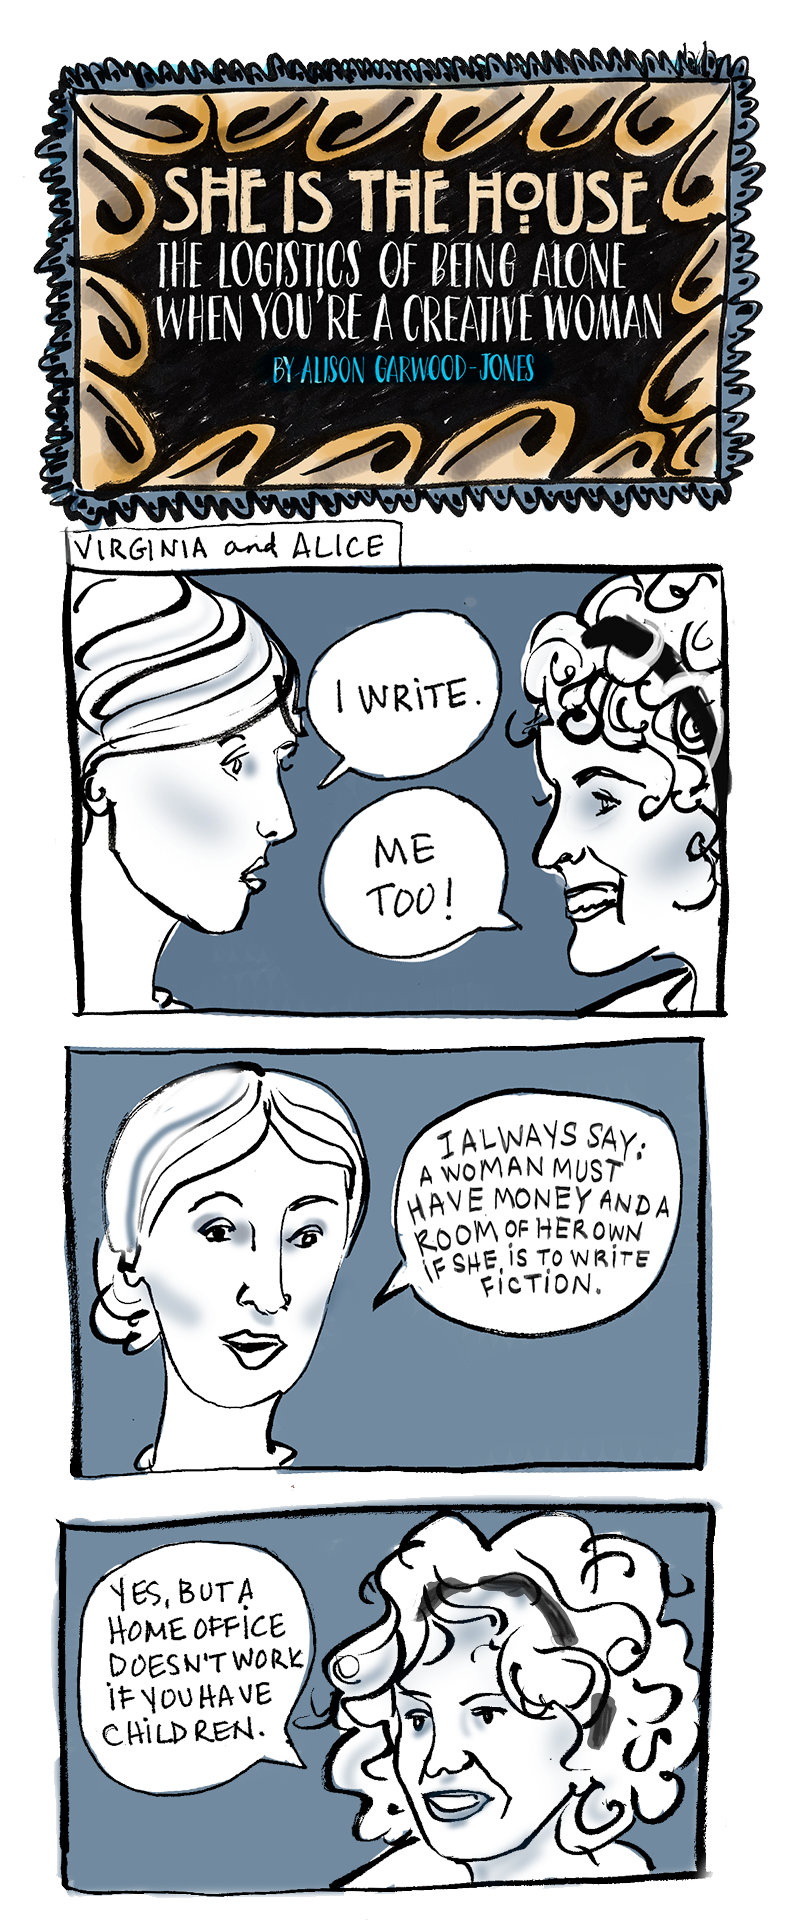 Virginia Woolf and Alice Munro in conversation - comic by Alison Garwood-Jones